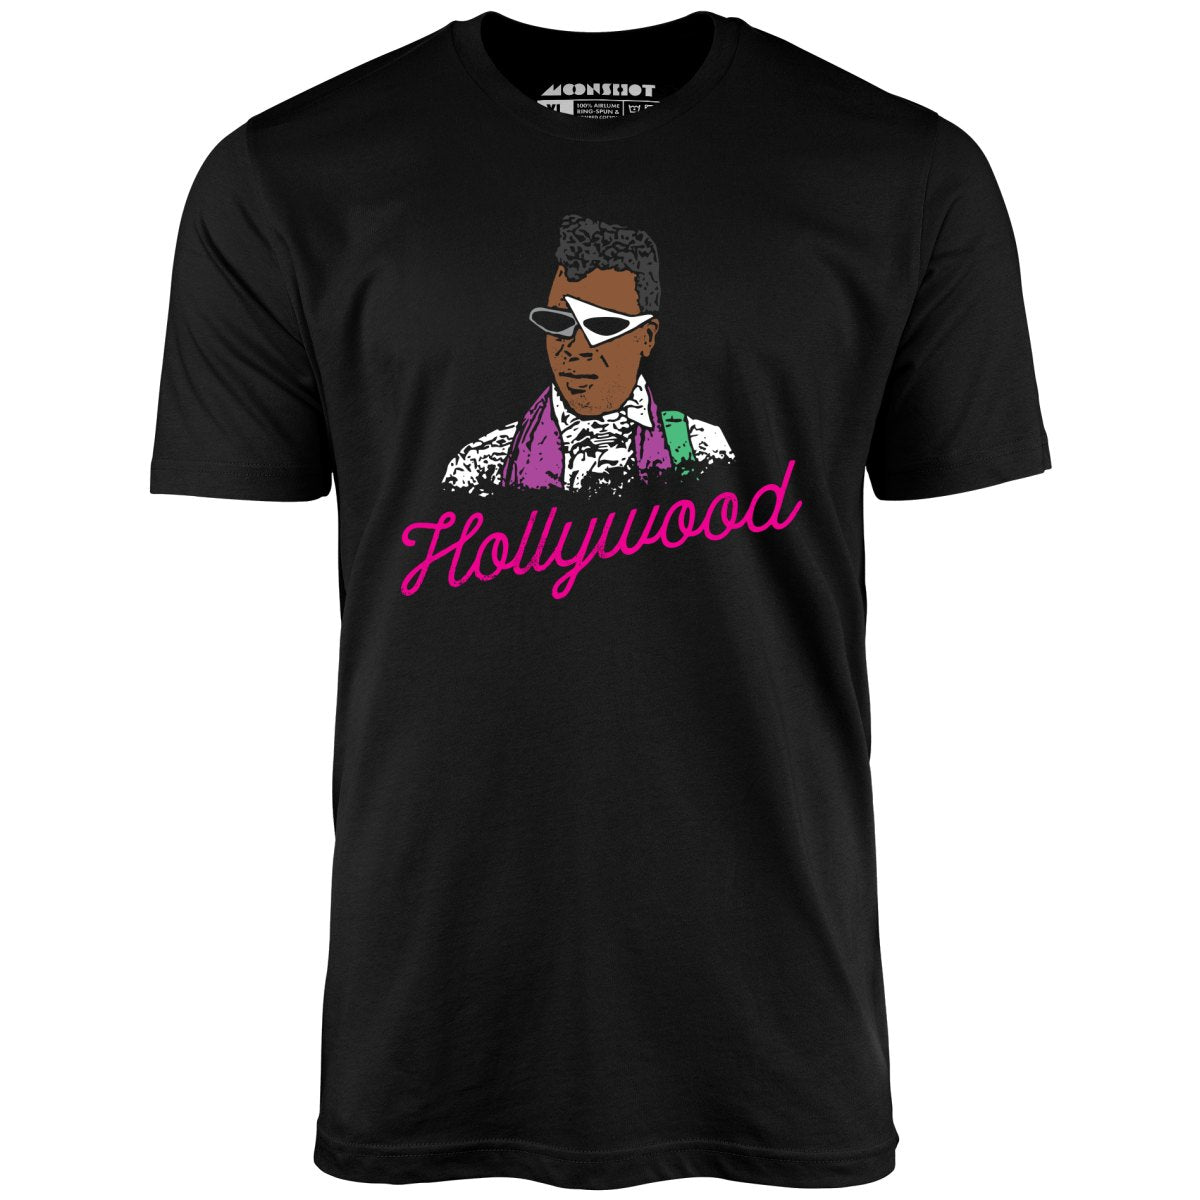 Hollywood - Mannequin - Unisex T-Shirt